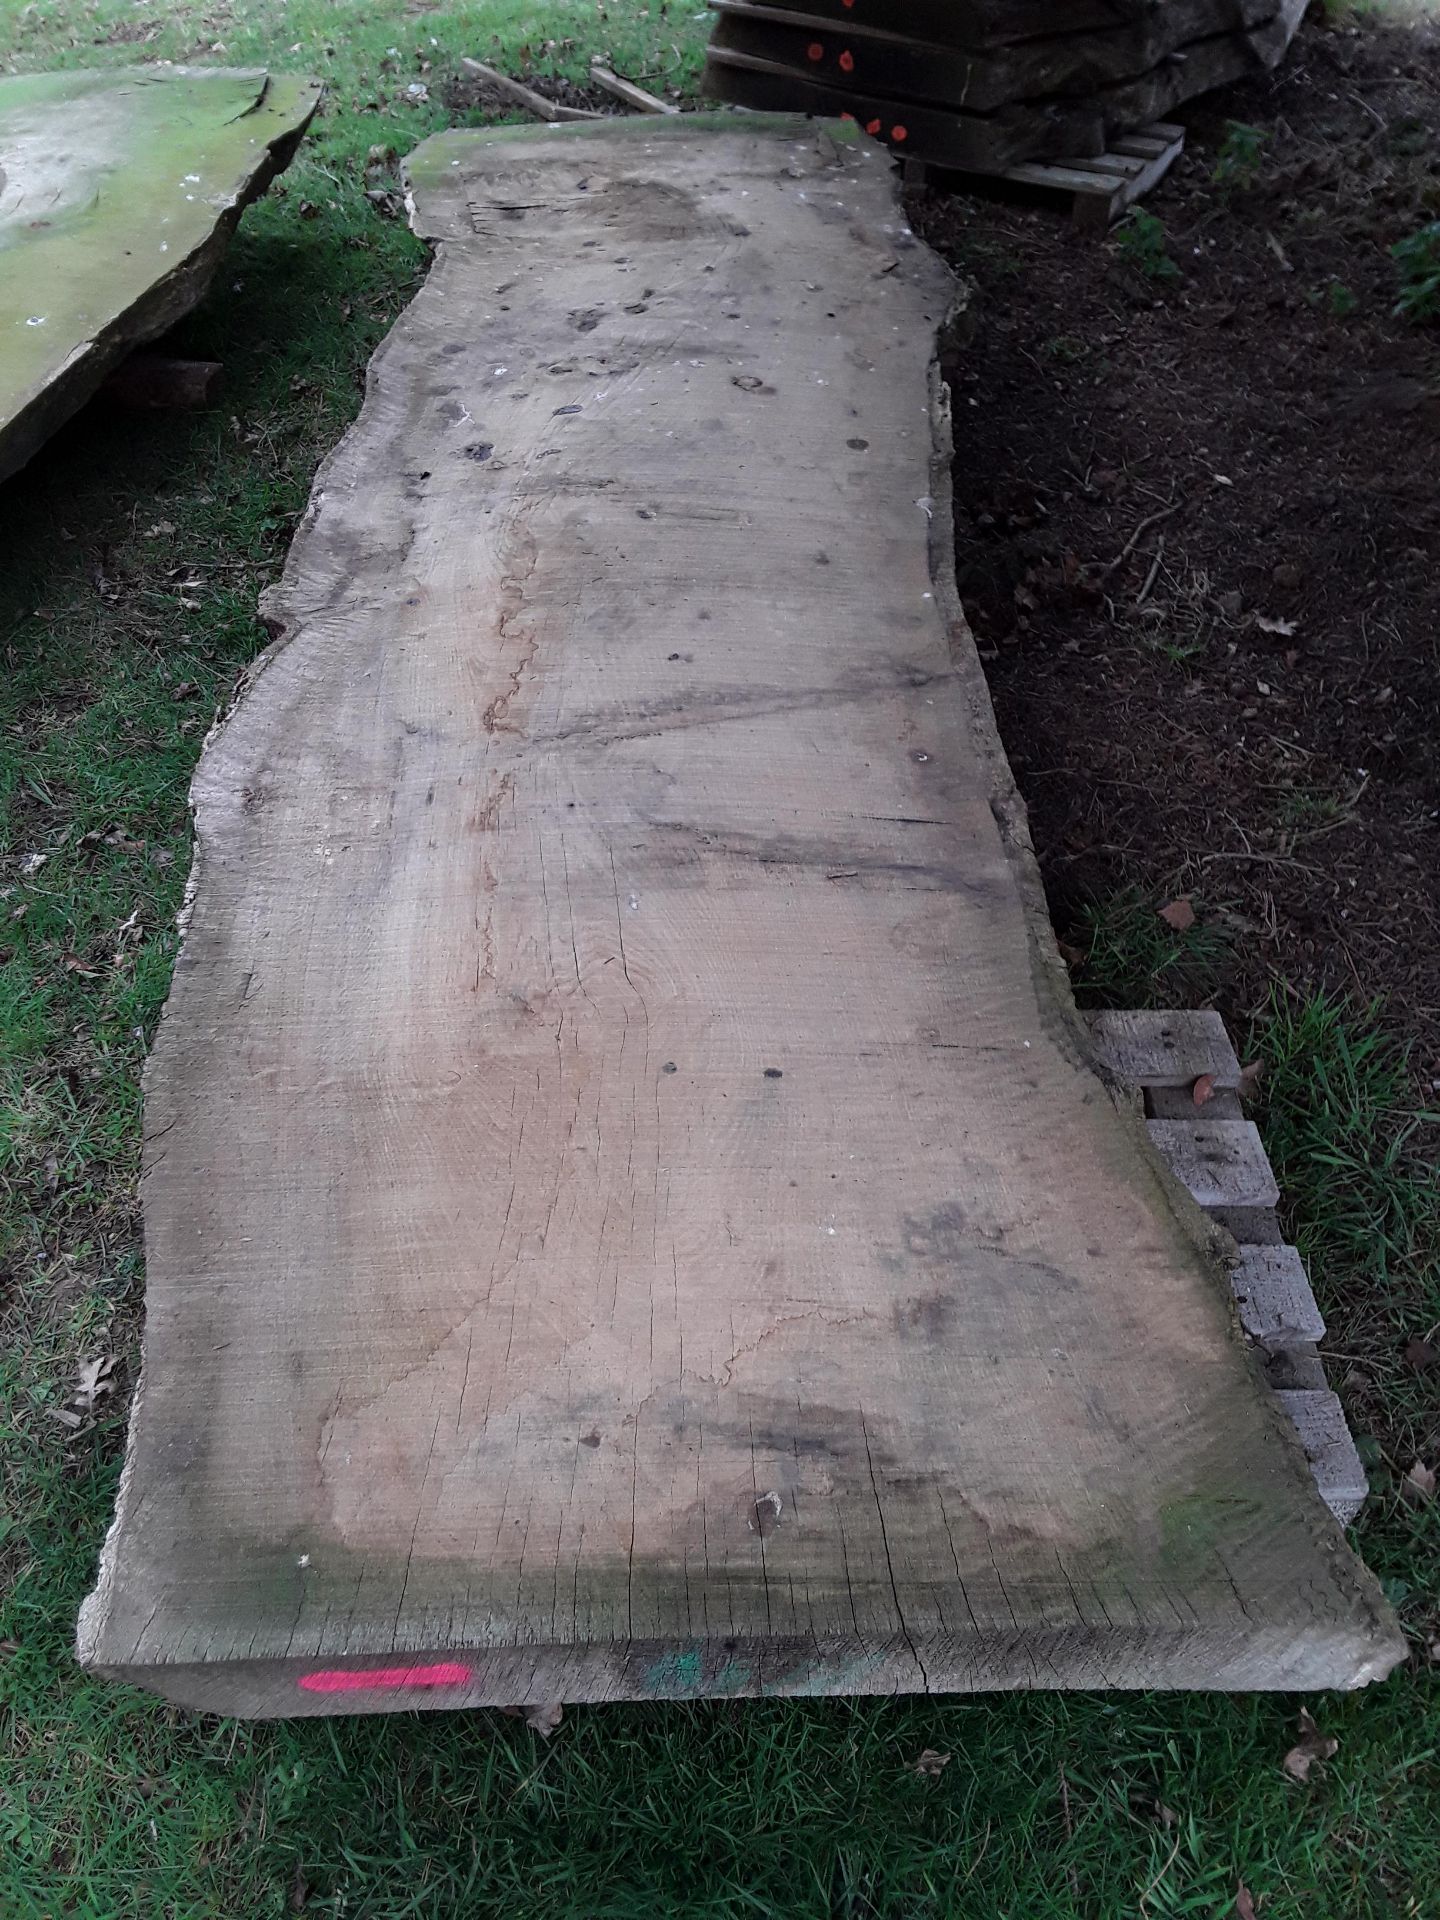 1 x Hardwood Timber Waney Edge / Live Edge Air Dried Sawn English Oak Slab / Table Top